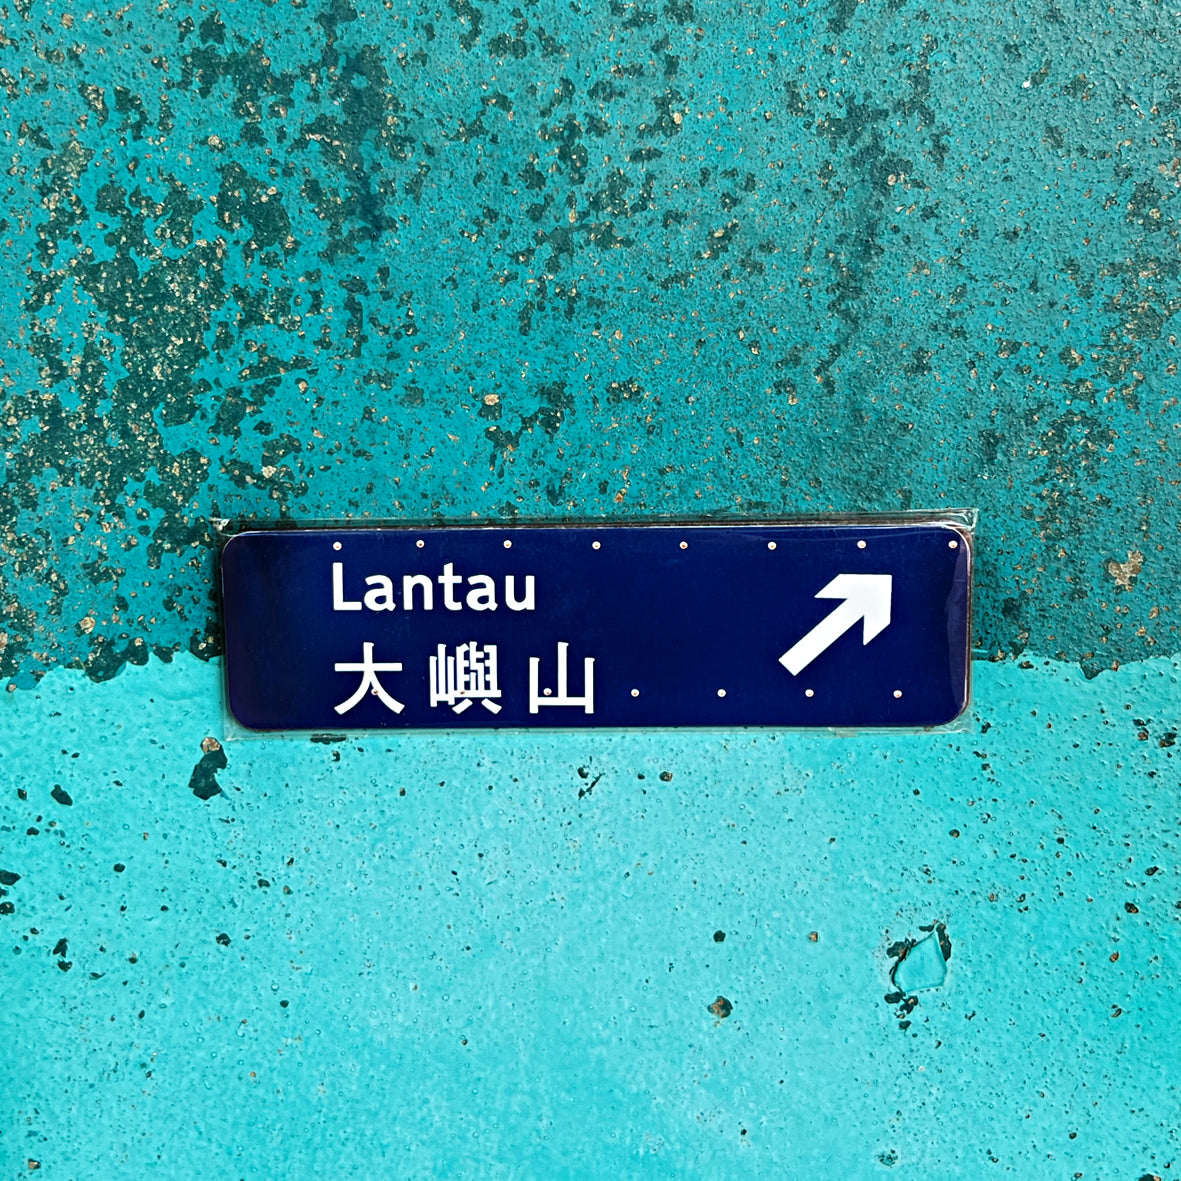 大嶼山 Lantau Island